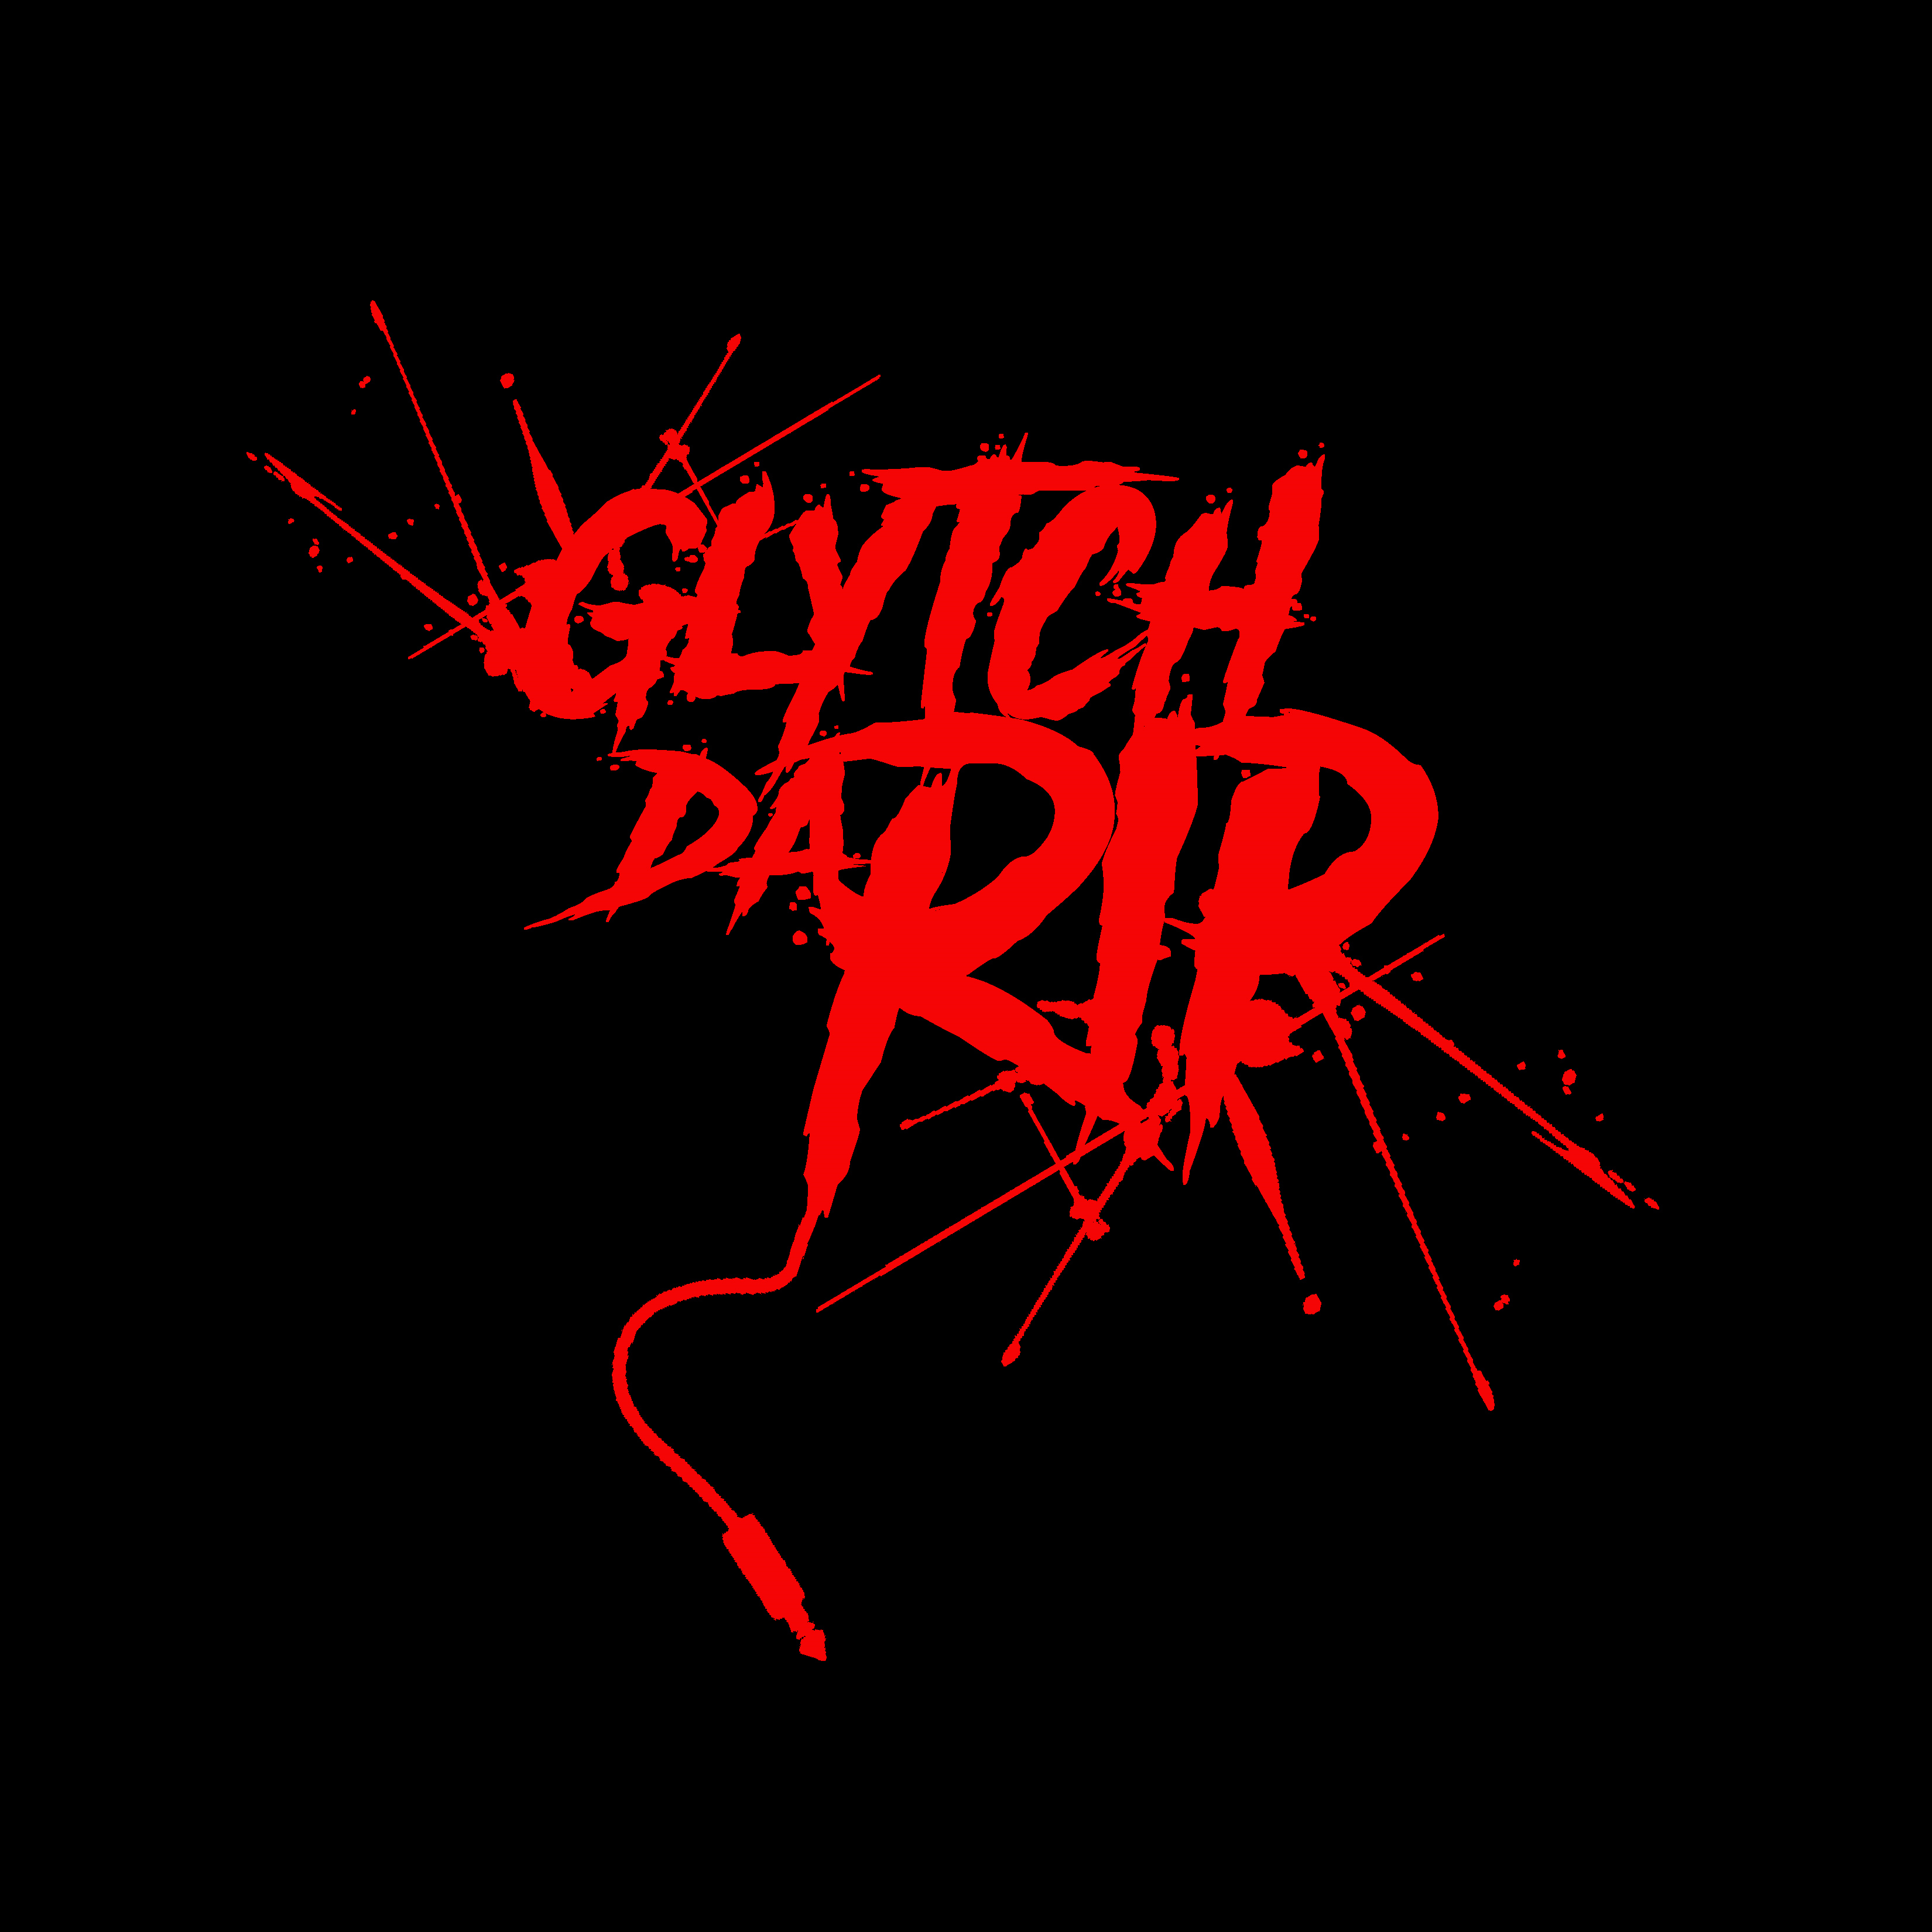 Glytch da Rip